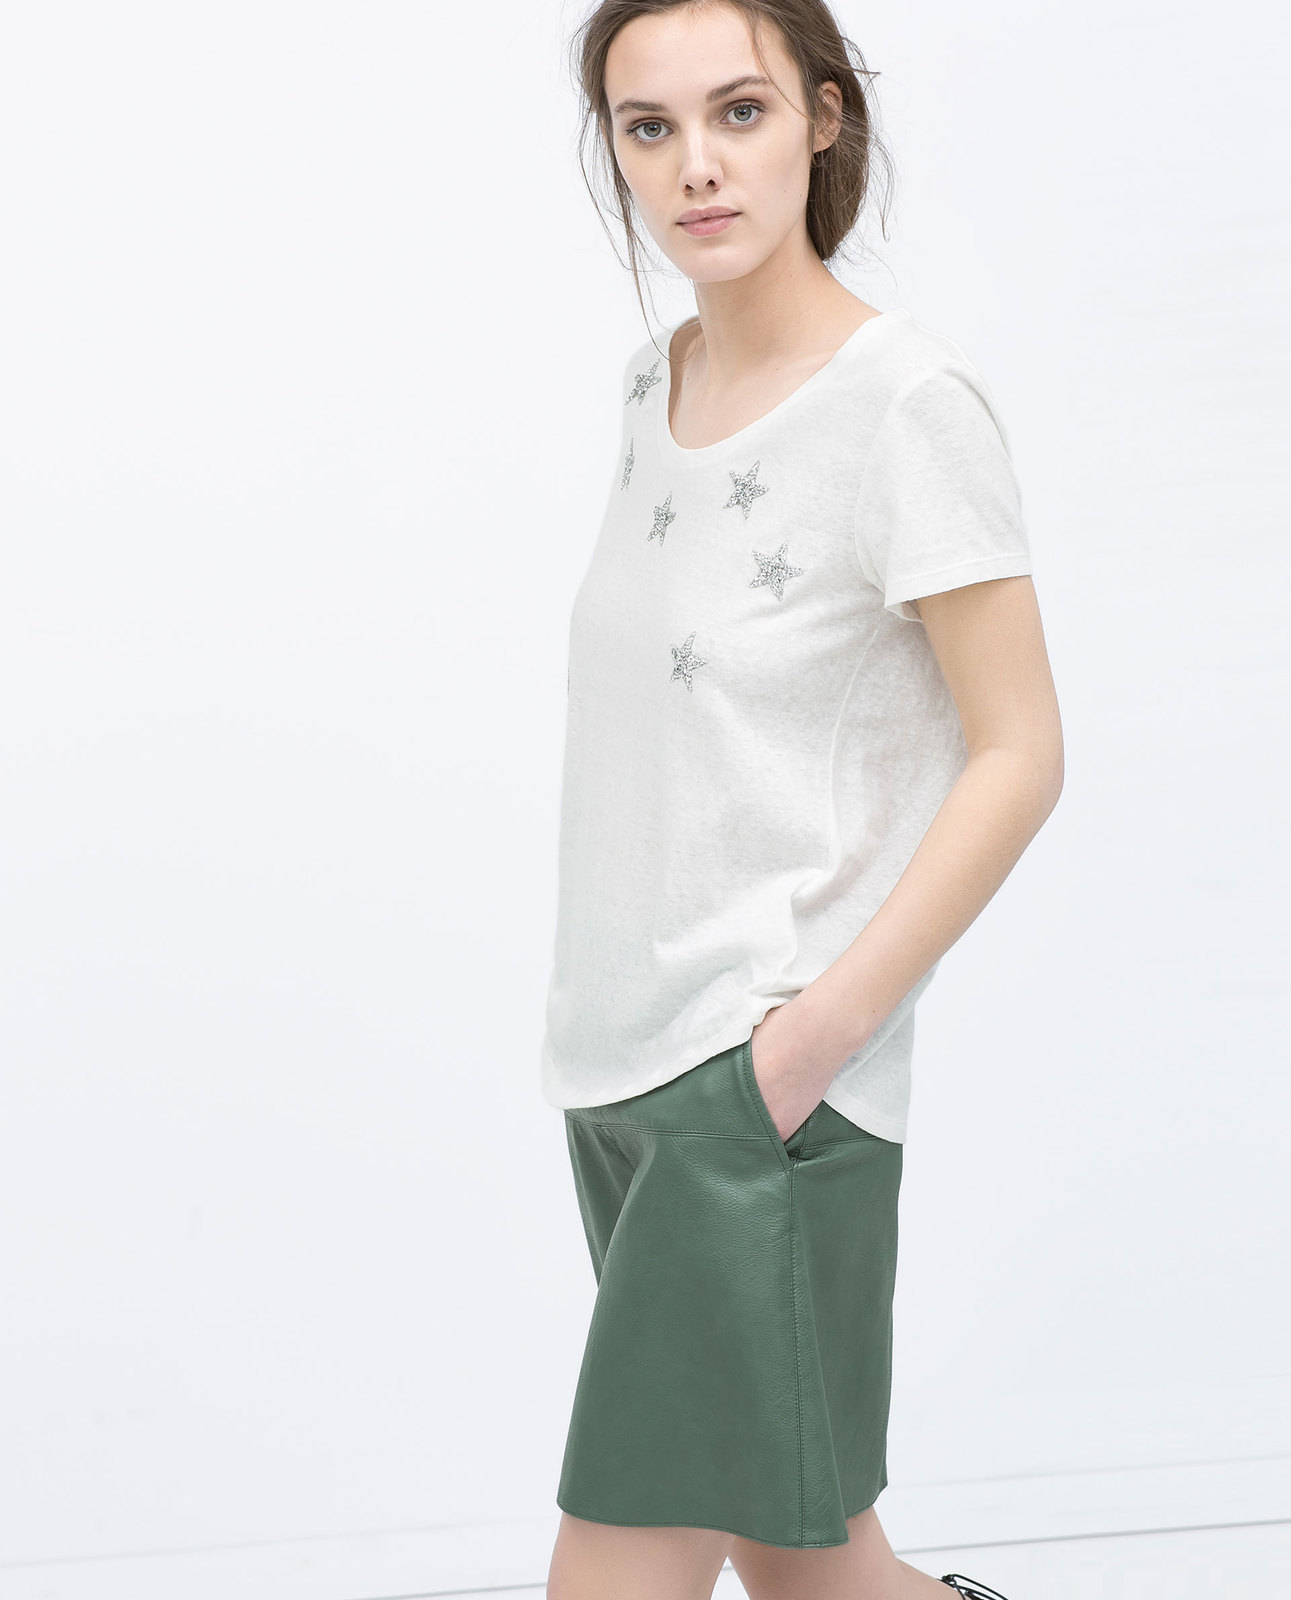 Zara csillagos fehér T-shirt 2015.02.23 fotója